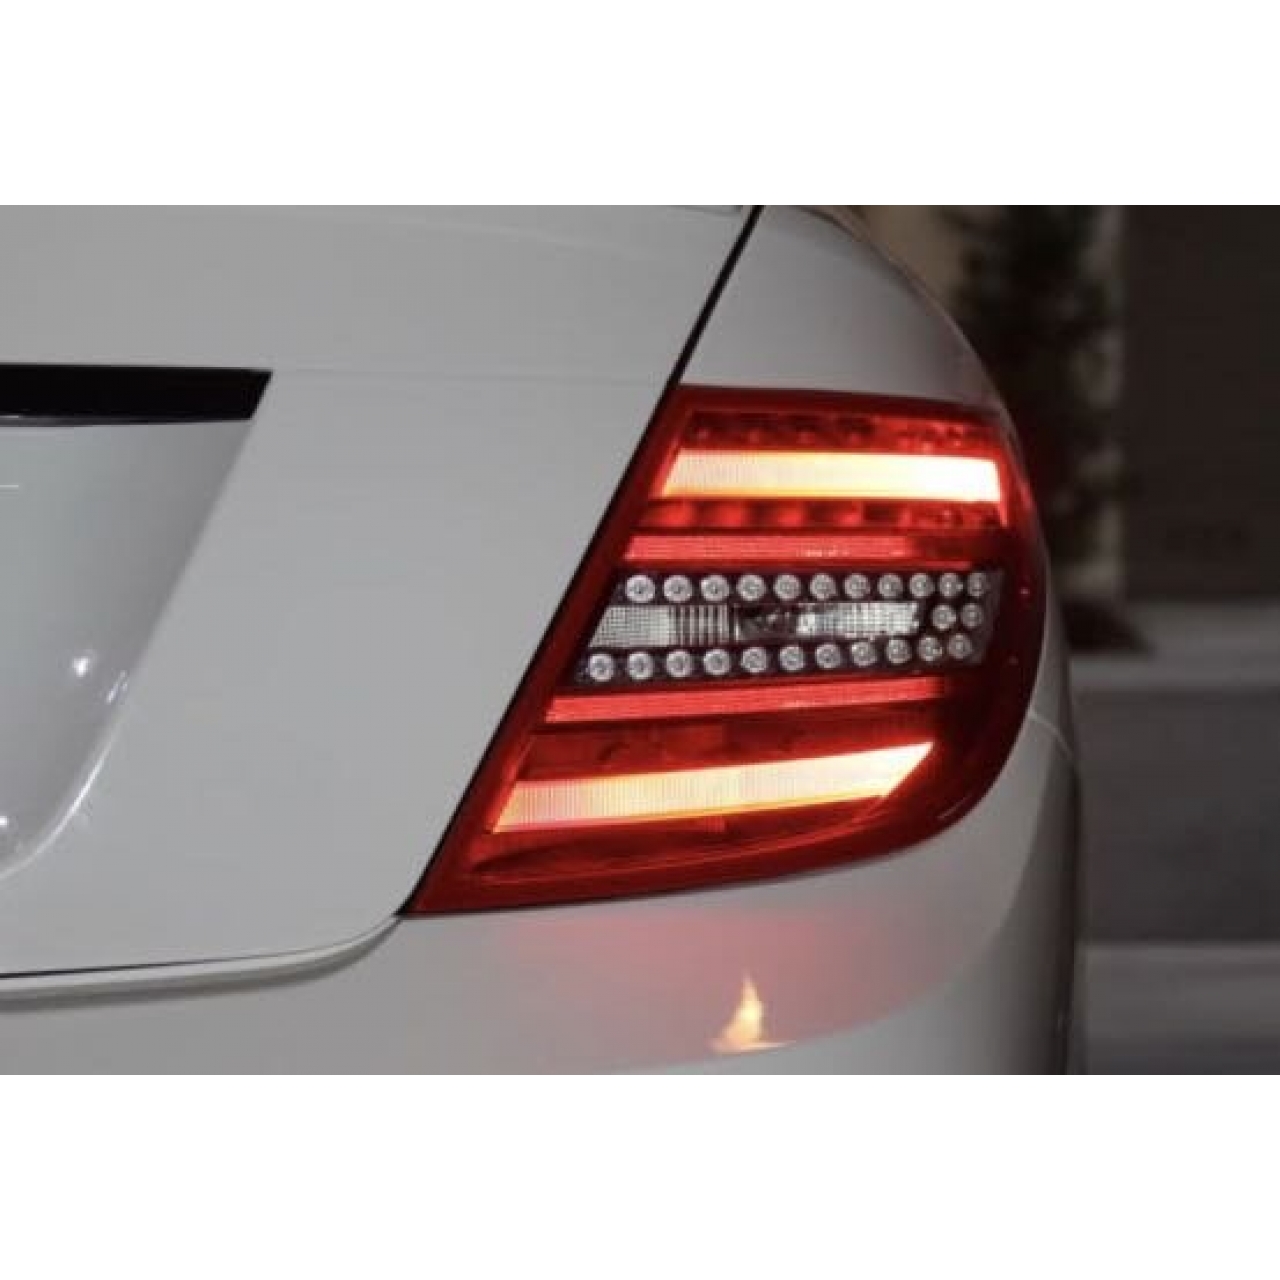 Mercedes Benz W204 Led Stop Seti Makyajlı Kasa 2011-2014